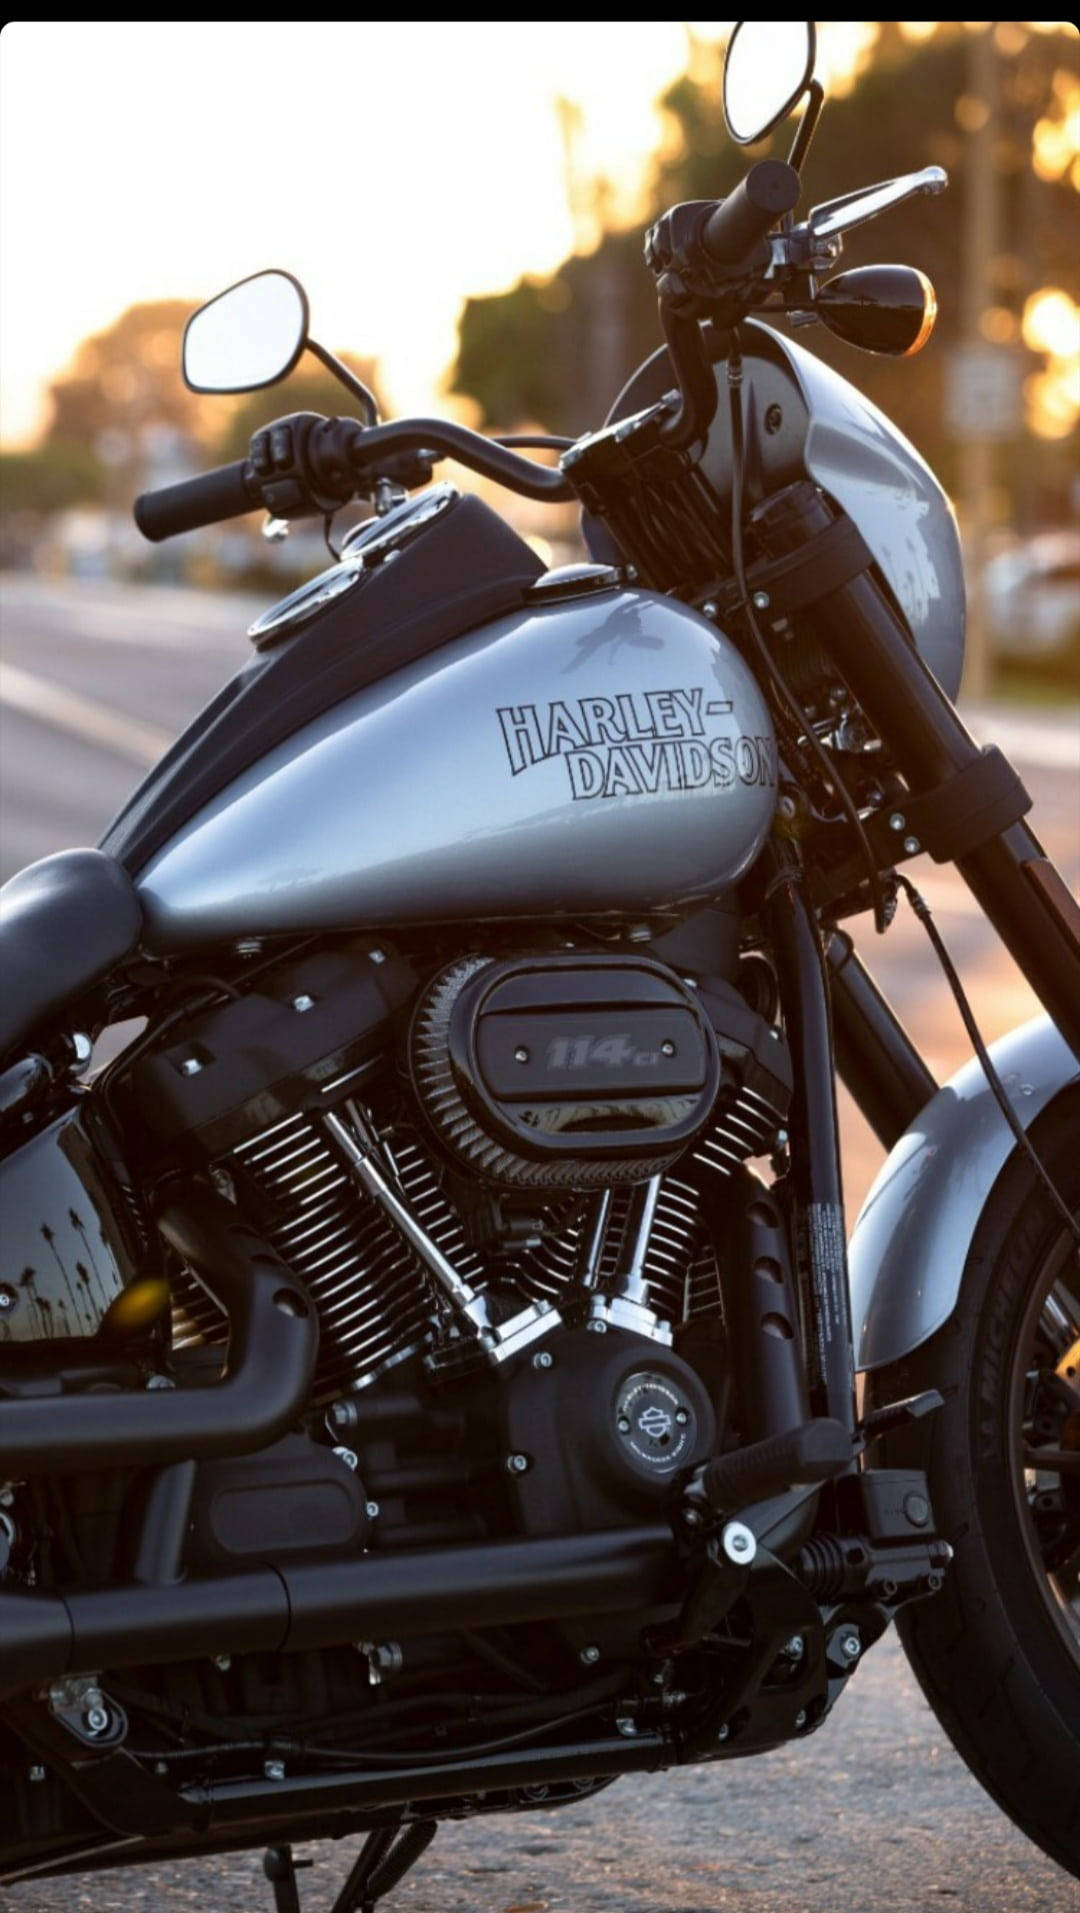 Shiny Silver Harley Davidson Mobile Wallpaper